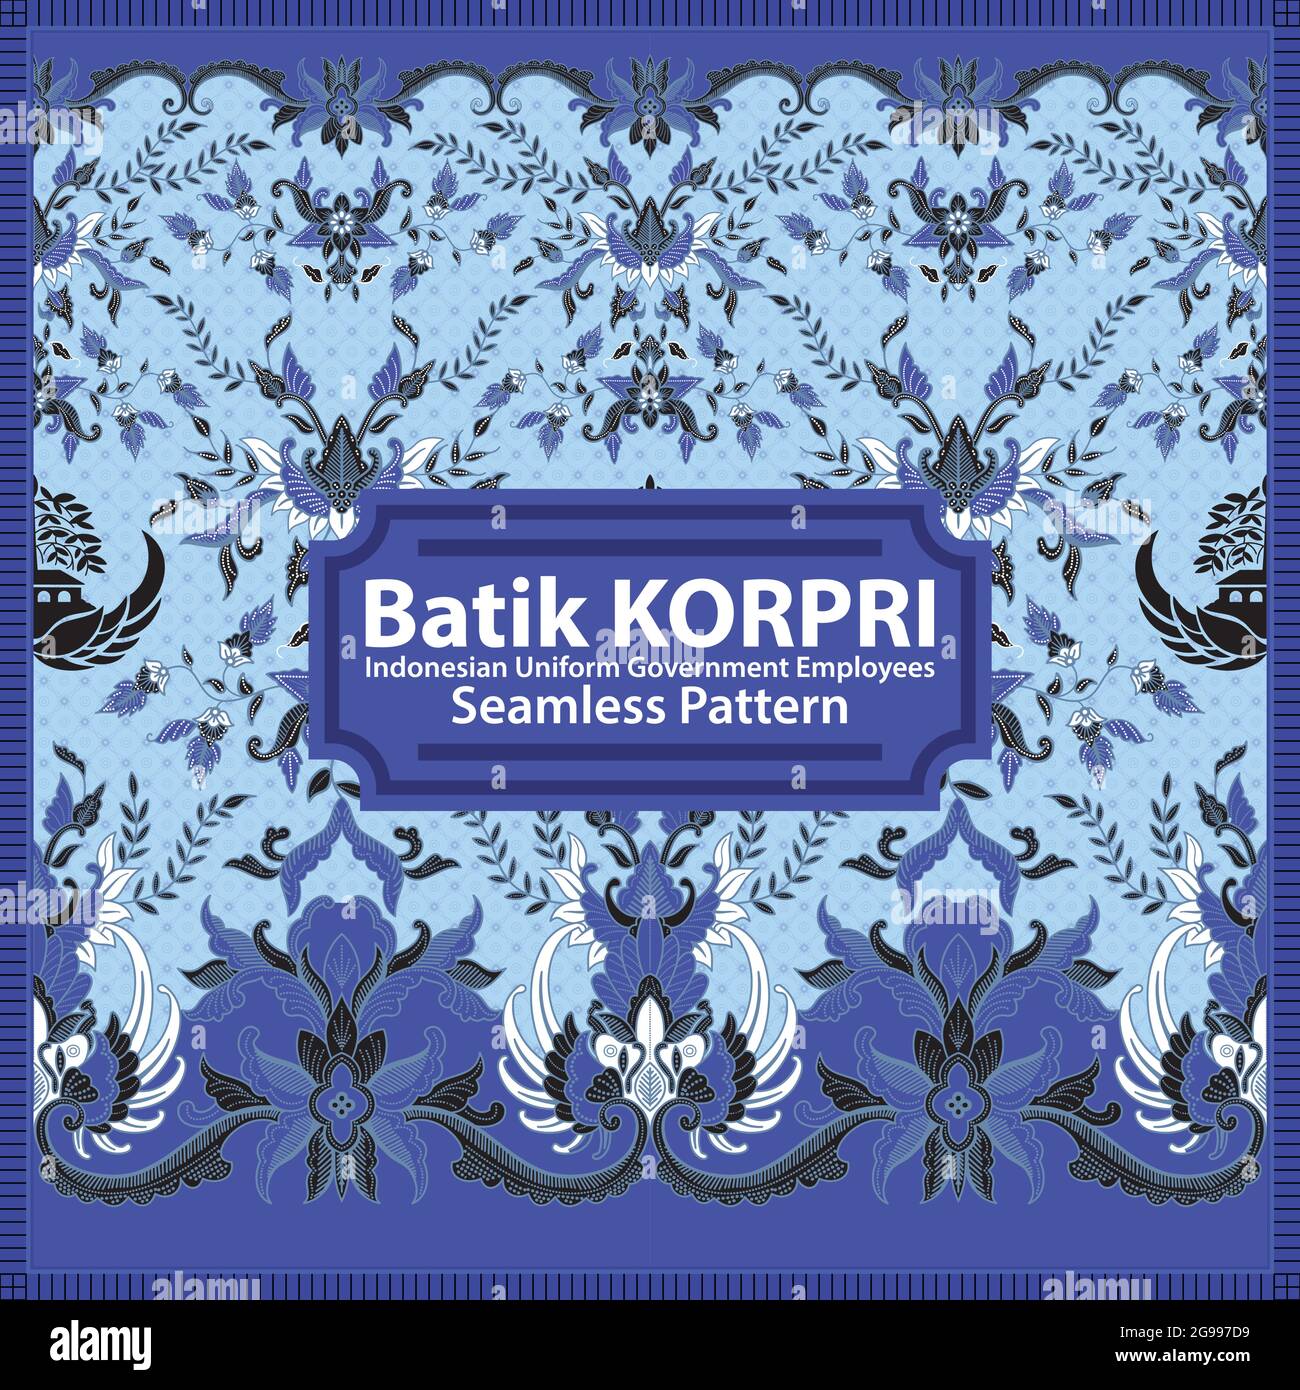 Batik Korpri - Indonesian Uniform Government Employees Stock Vector